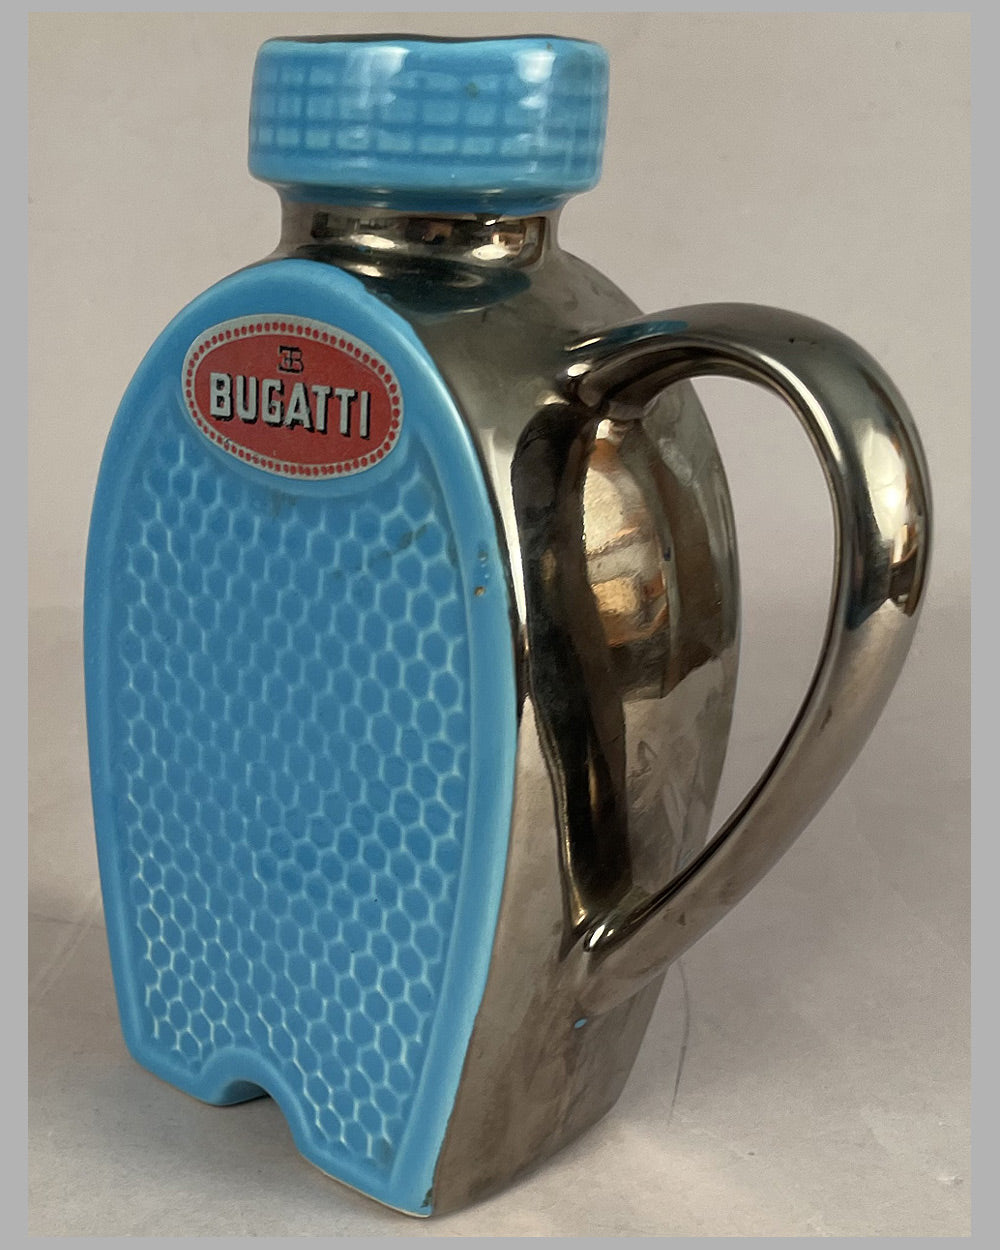 Le Chanteclair Bugatti radiator water pitcher from Rene Dreyfus’ restaurant